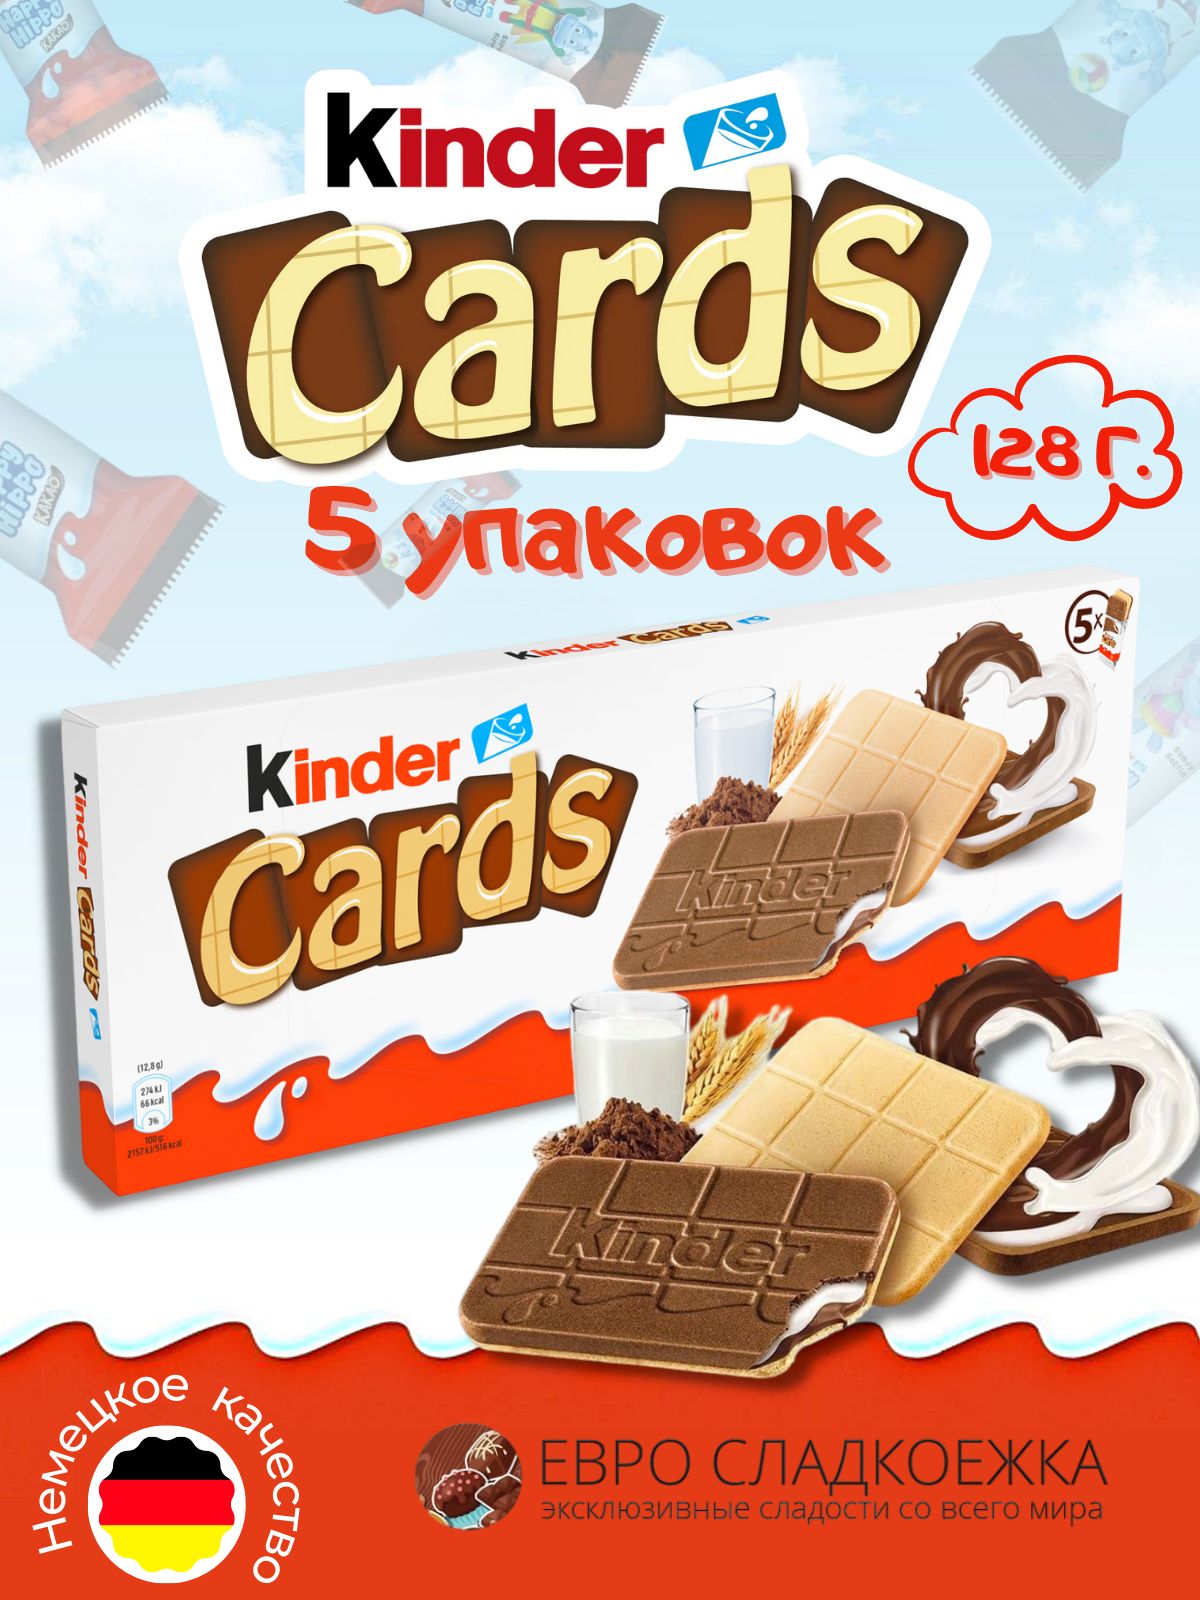 Киндер печенье. Kinder Cards 128 г.. Киндер Кардс. Печенье Киндер Кардс.